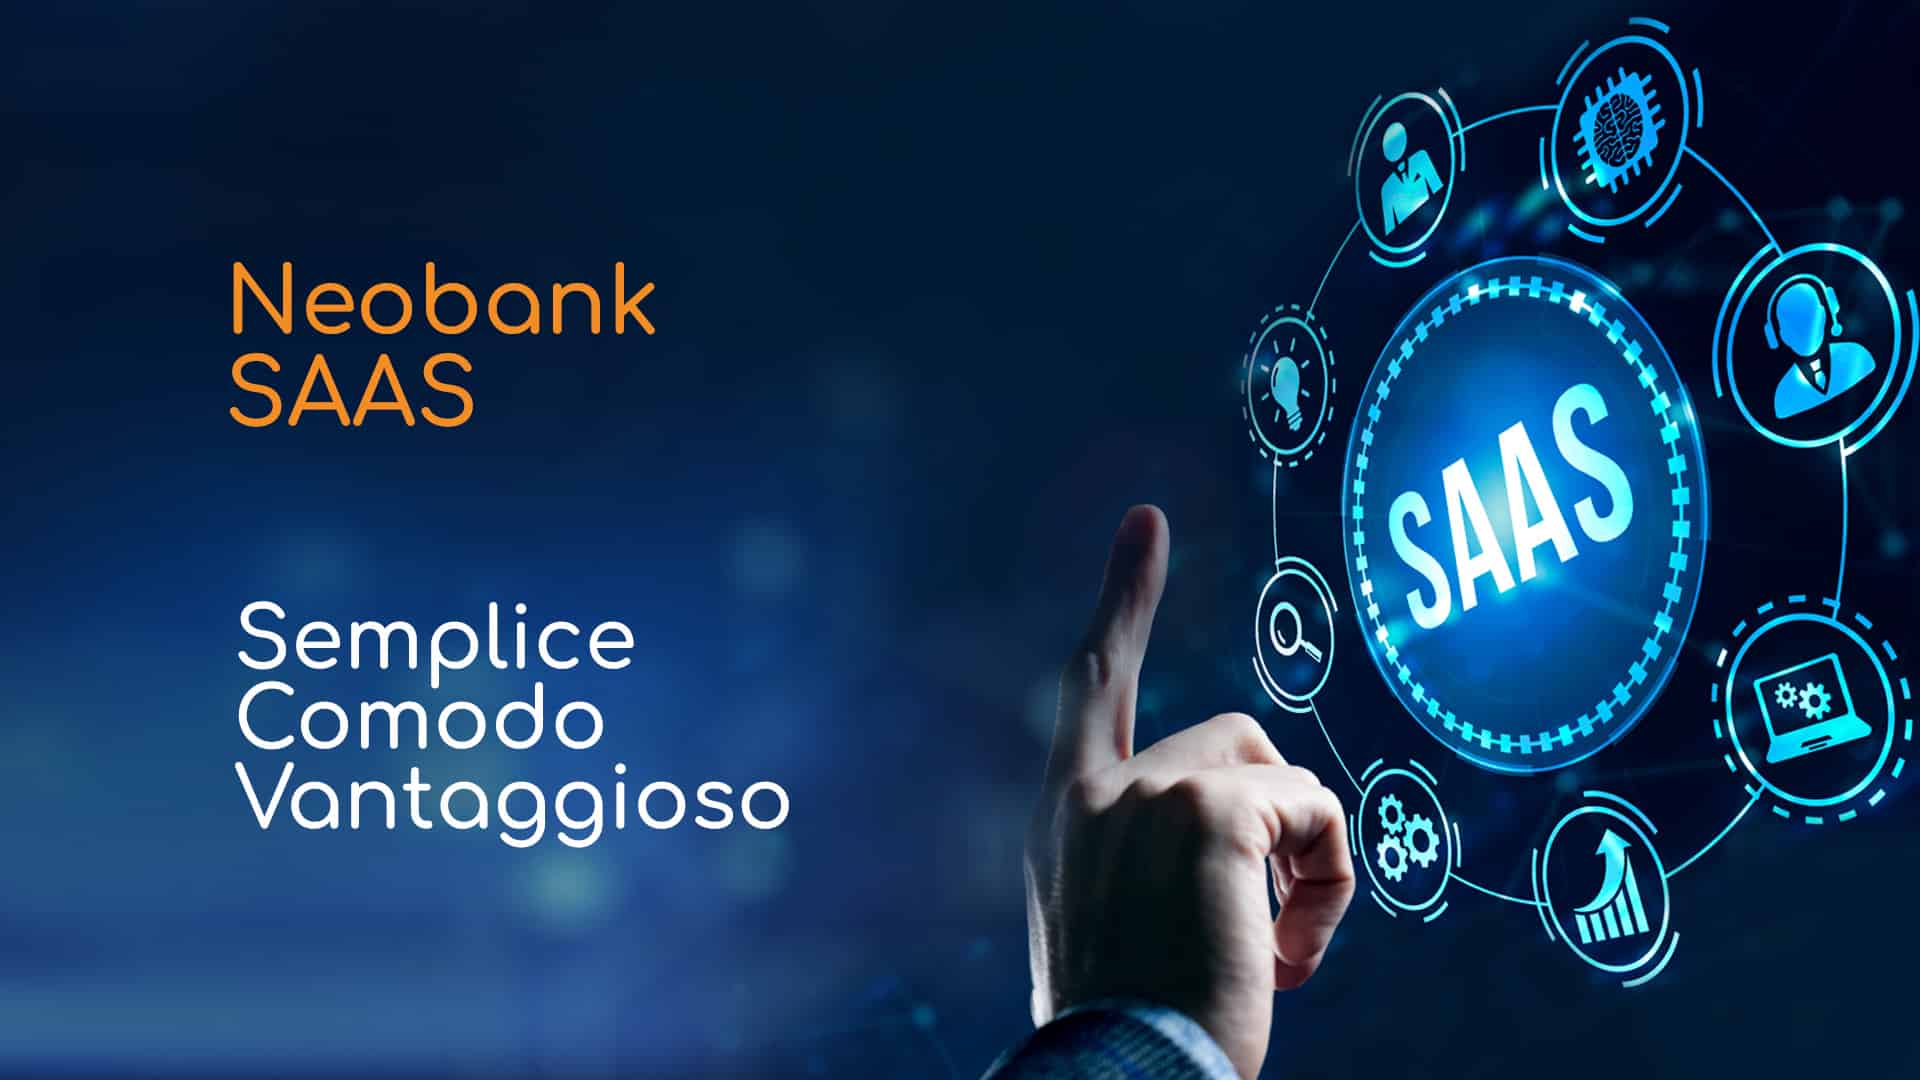 SaaS - Smart Bank 800